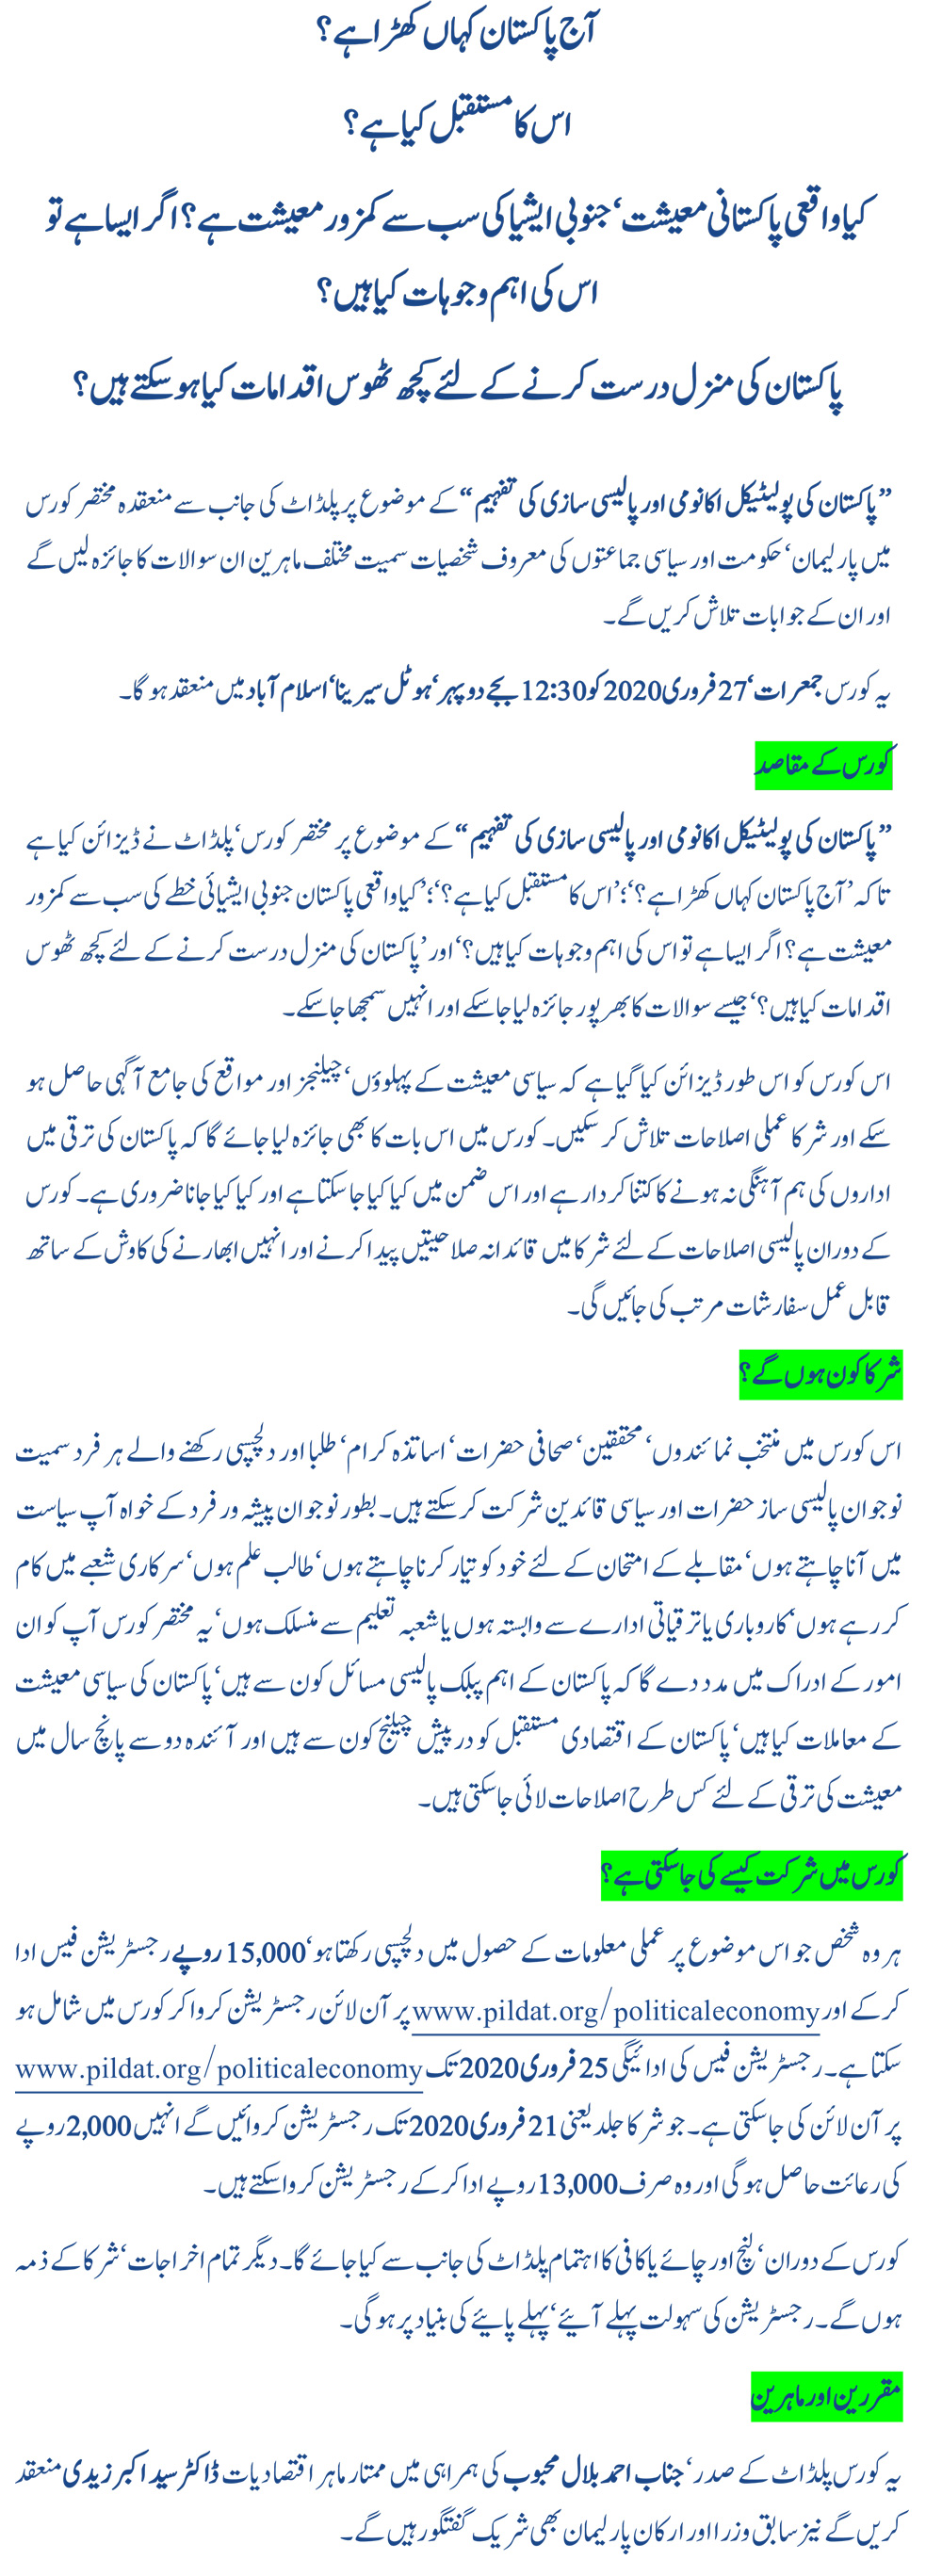 economy of pakistan essay in urdu